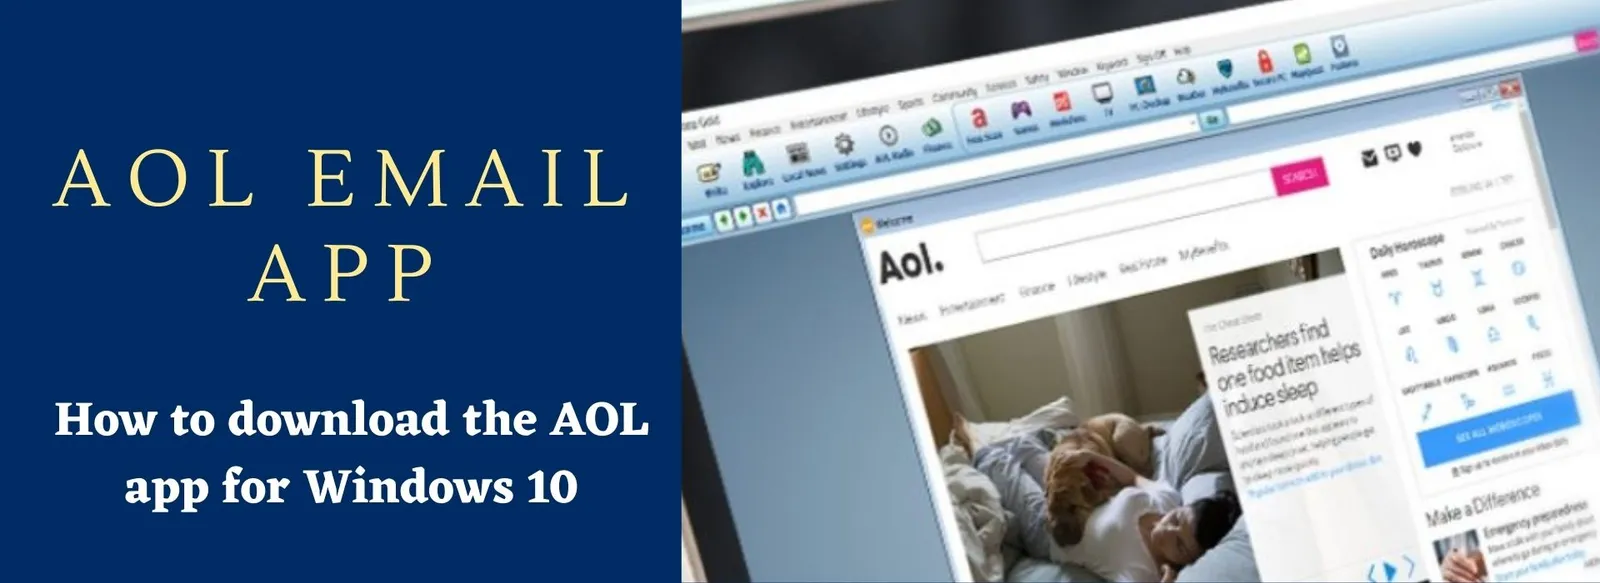 Aol App | download AOL app for Windows10 | Create AOL accounts